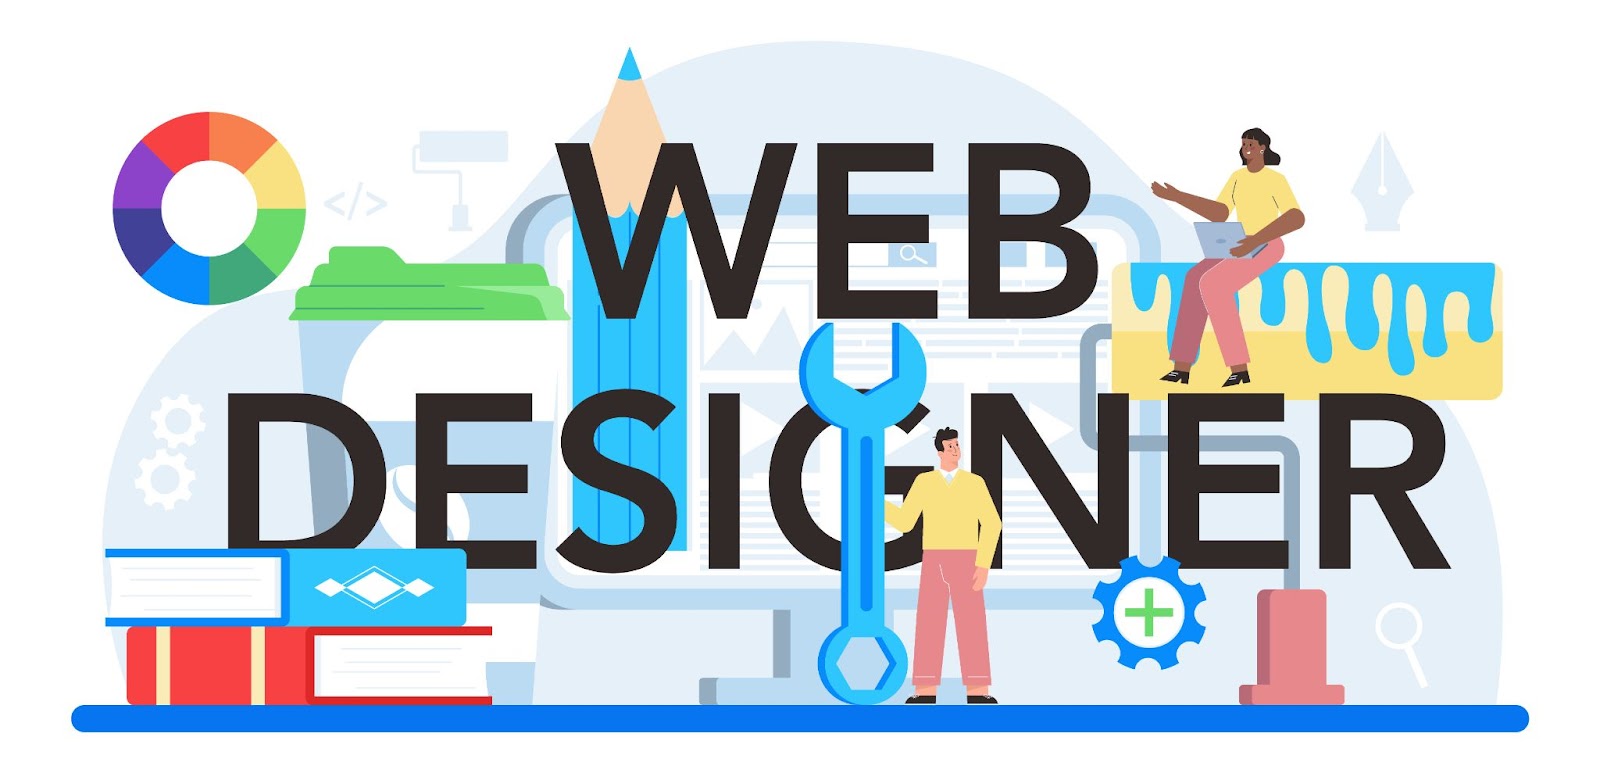 A design template about a web designer